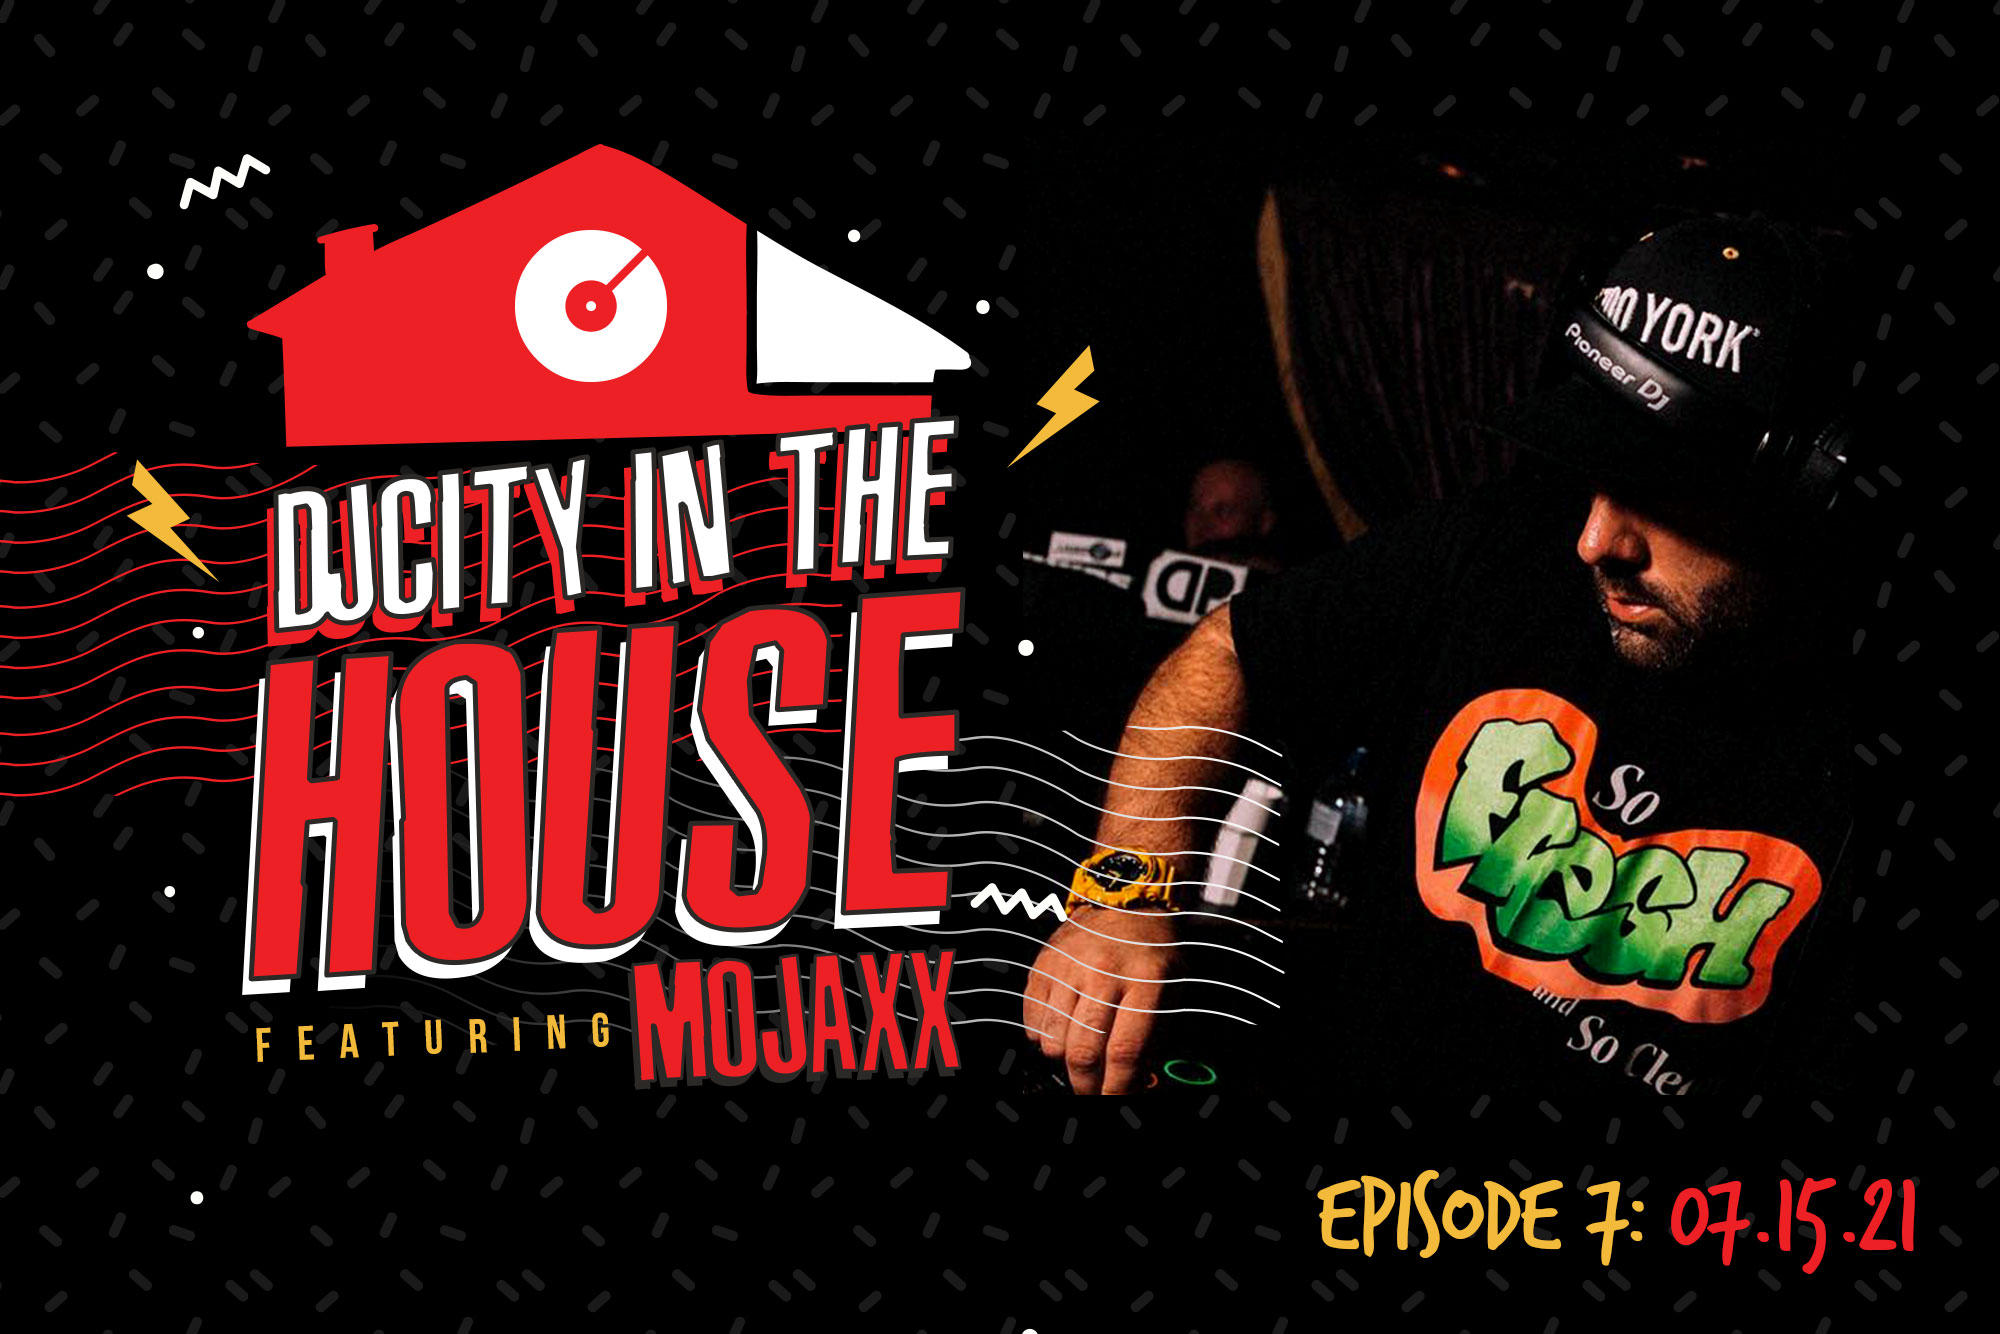 Listen to ‘DJcity in the House’ Feat. Mojaxx: July 15